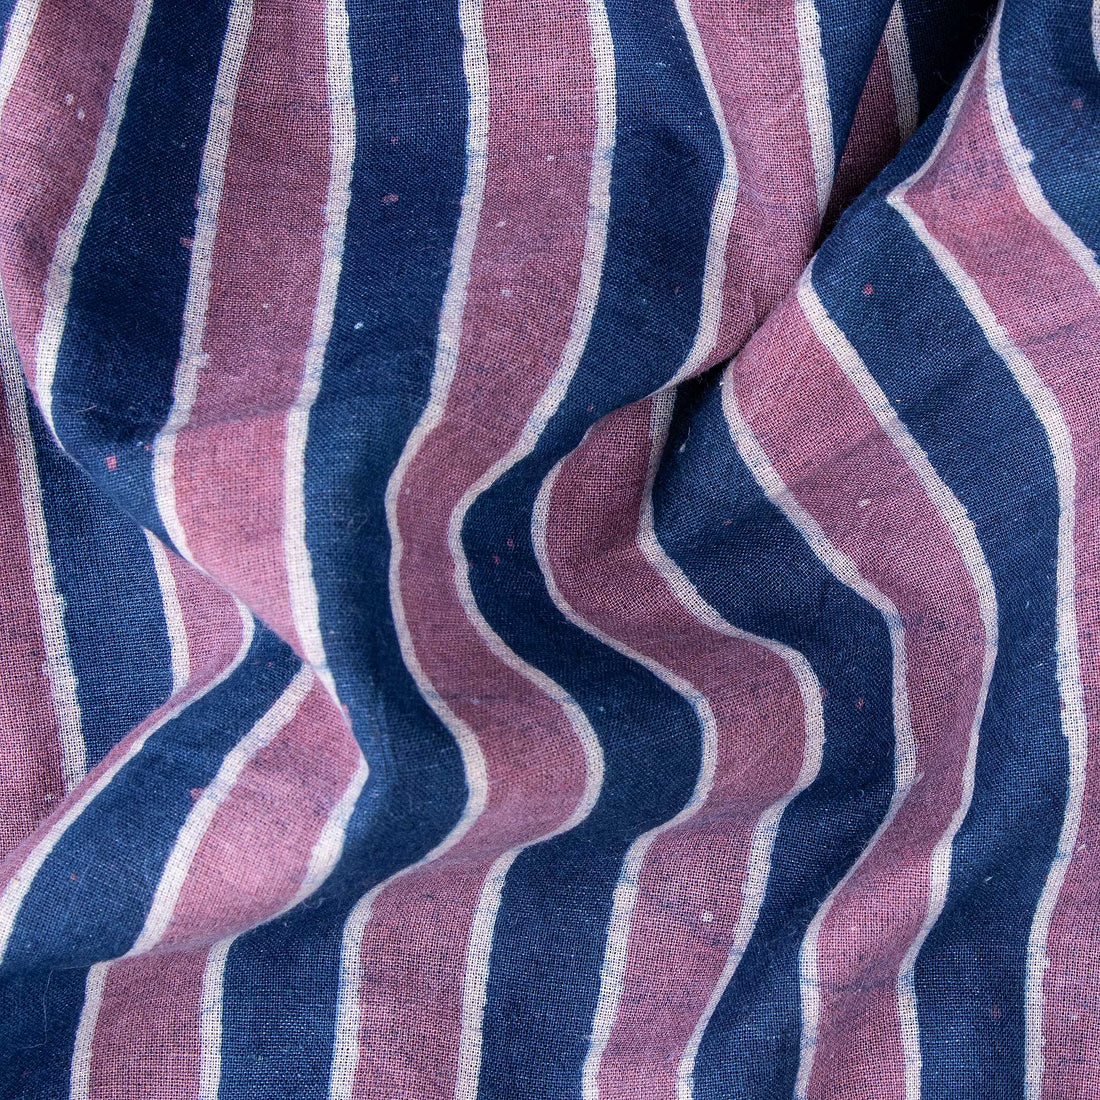 Indigo Blue and Pink Striped Silk Cotton Fabric